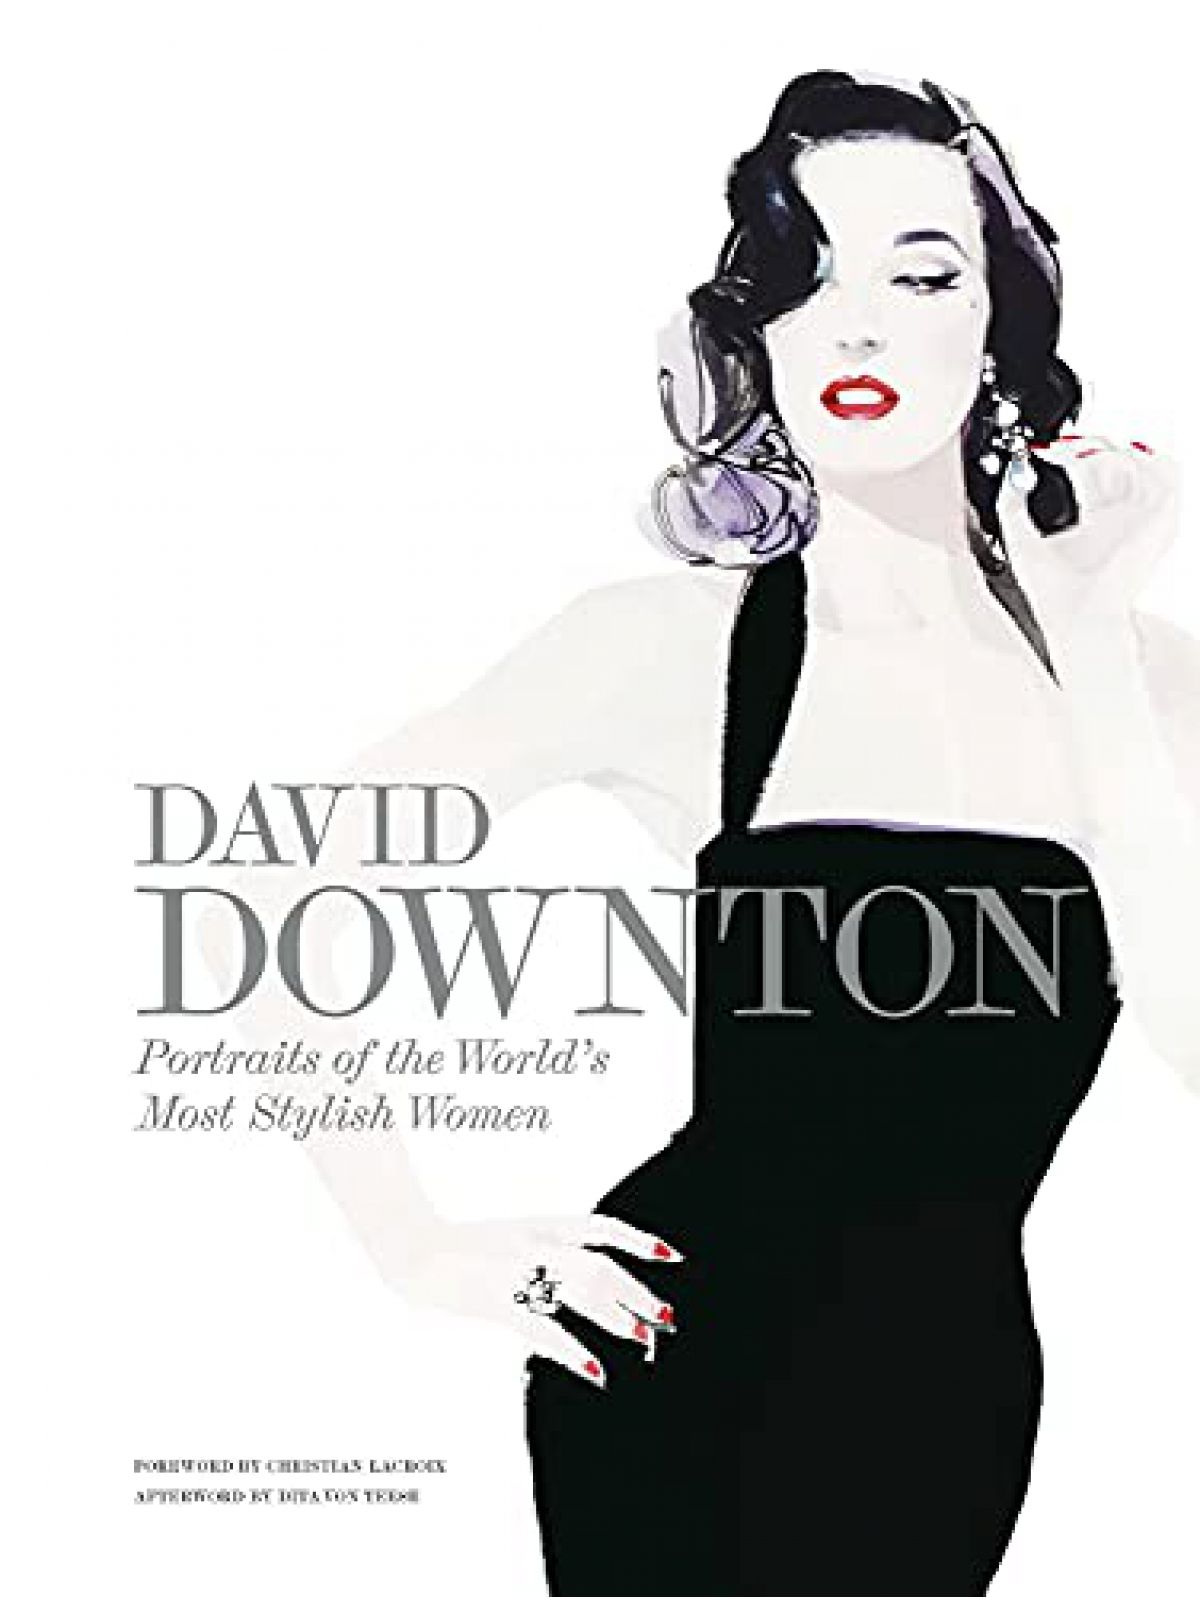 DAVID DOWNTON PORTRAITS OF THE WORLD’S MOST STYLISH WOMEN  Купить Книгу на Английском